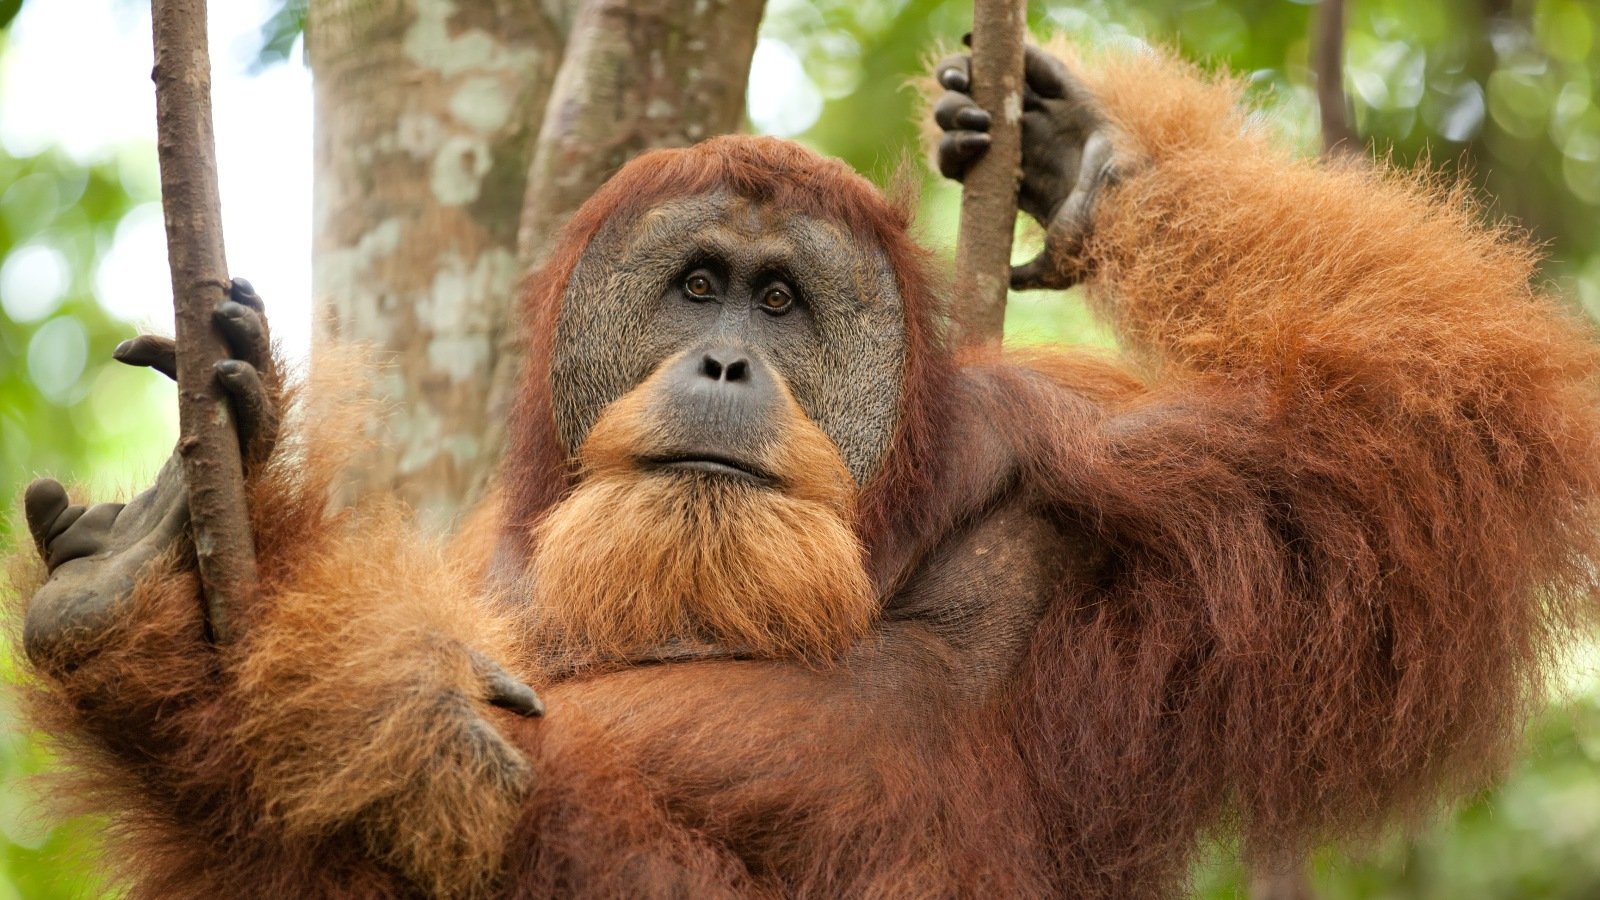 sumatran wild orangutan hanging on liana and looking at camera